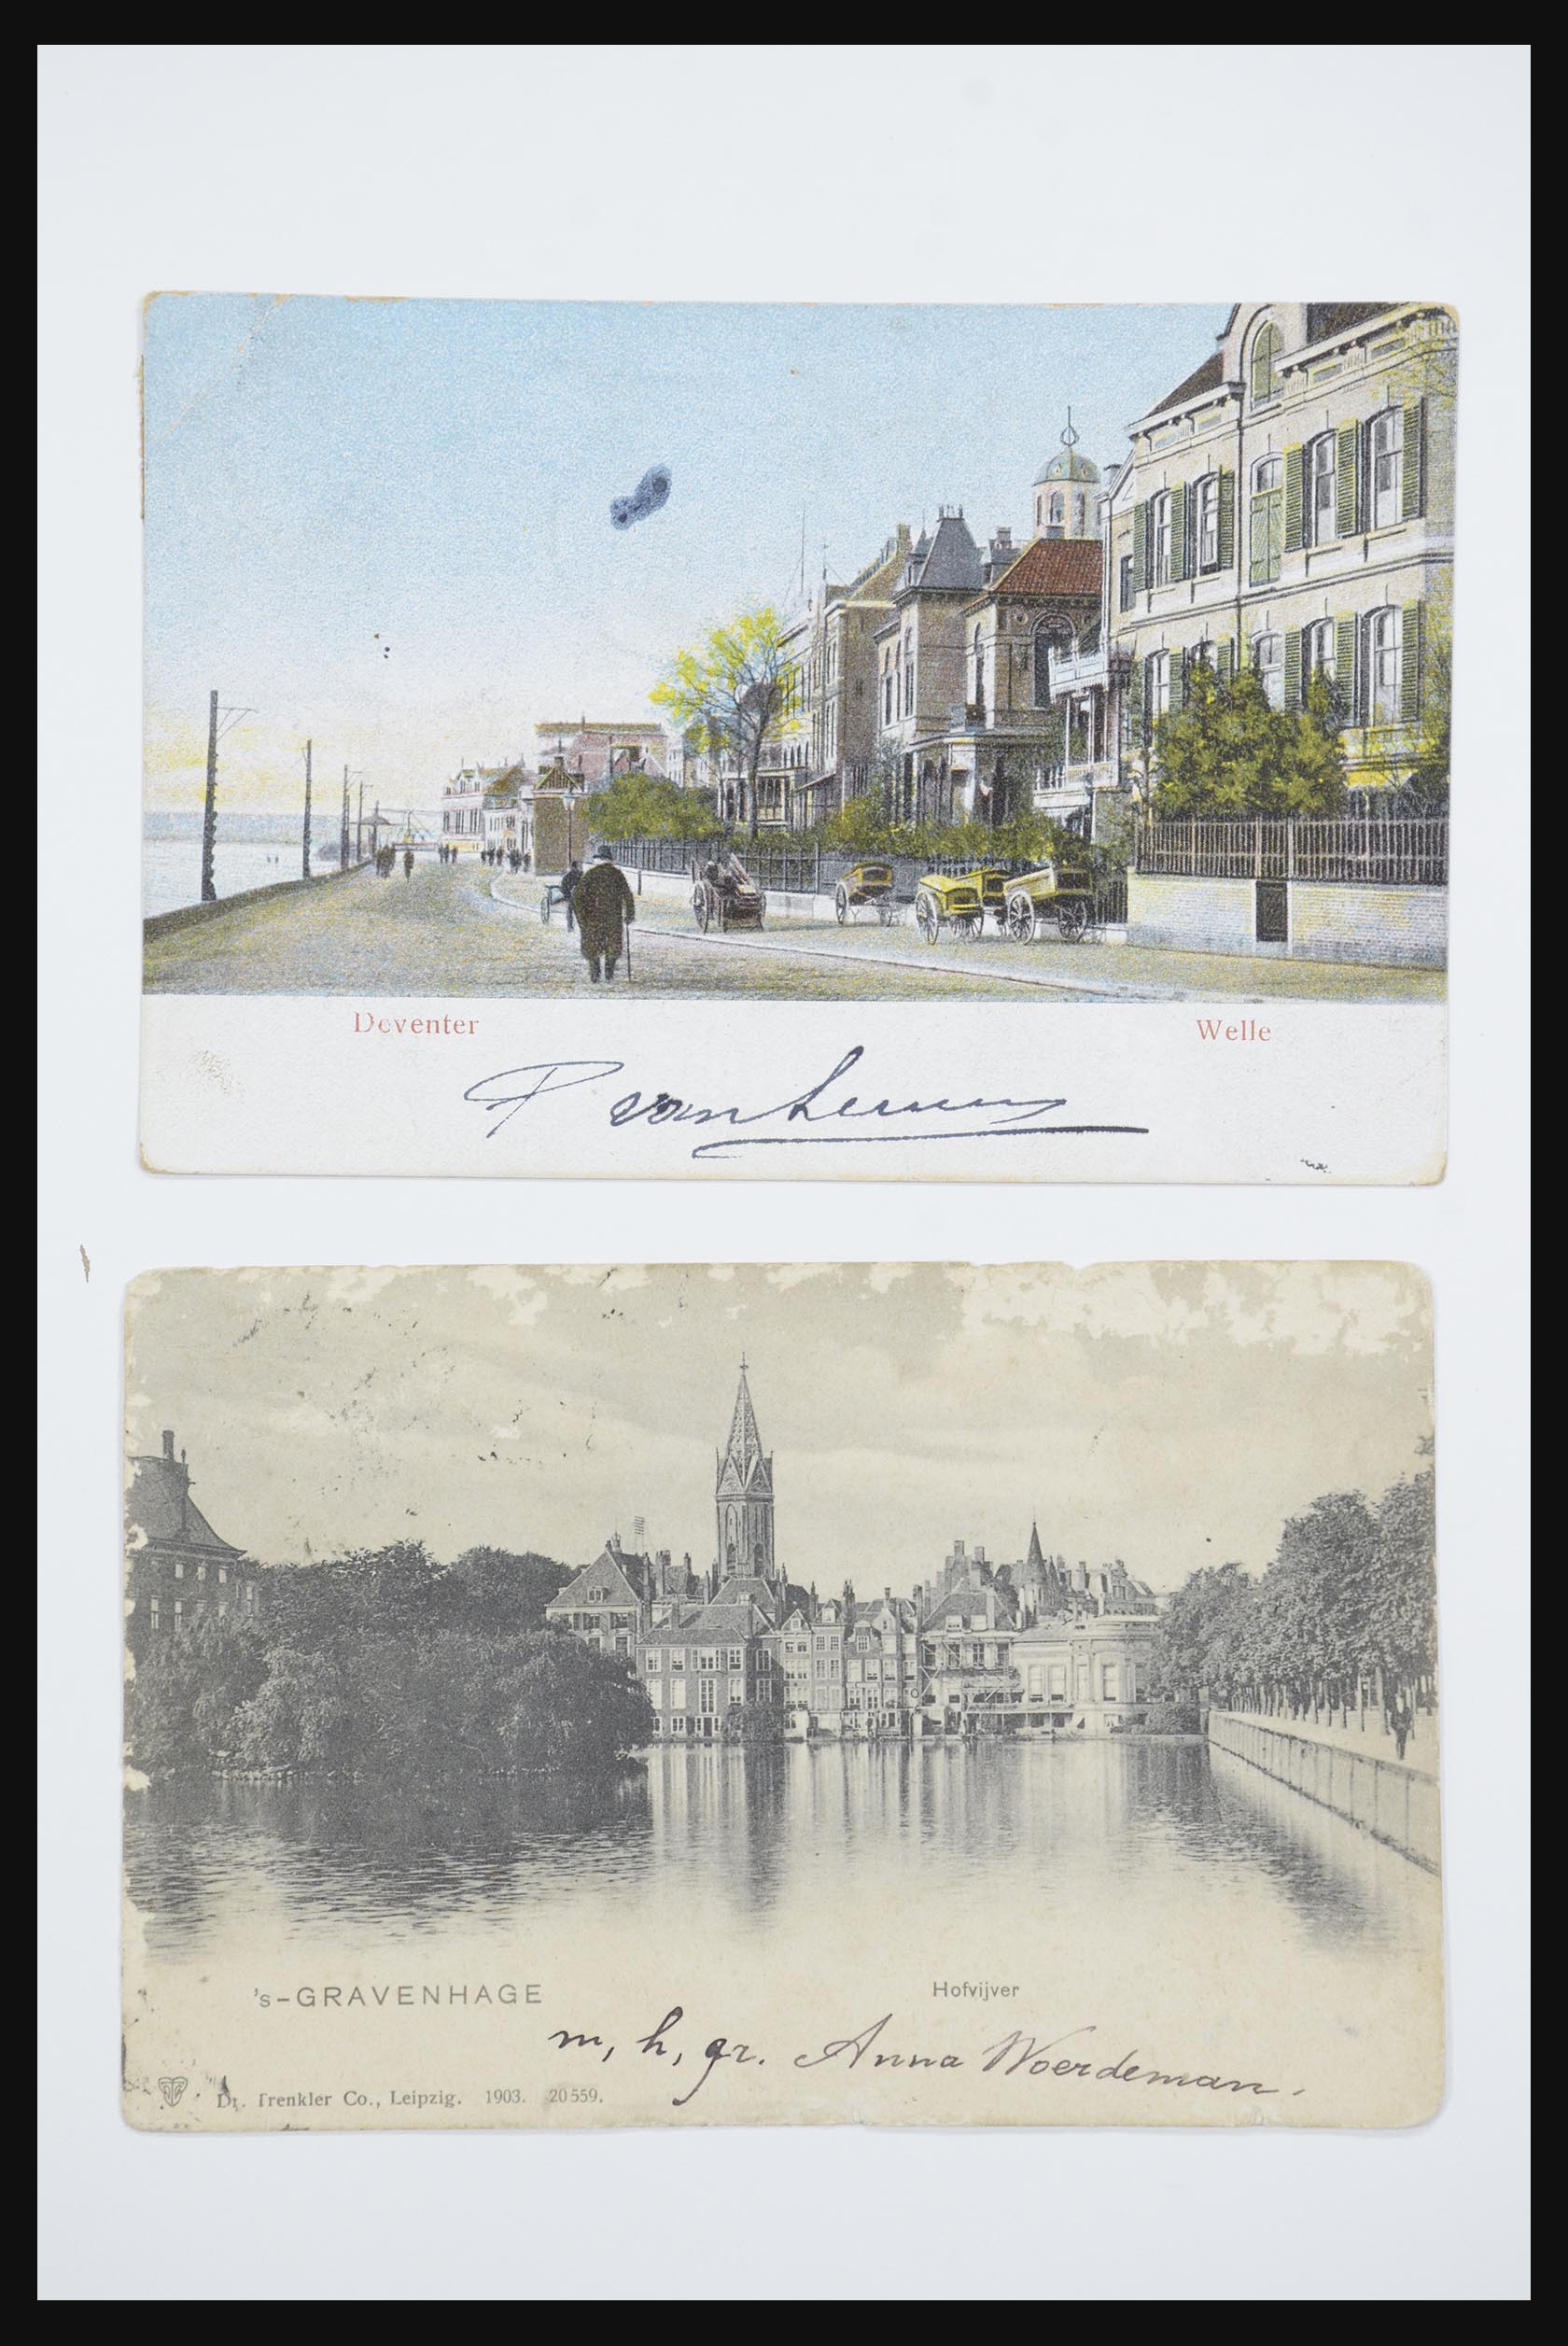 31668 066 - 31668 Netherlands picture postcards 1905-1935.